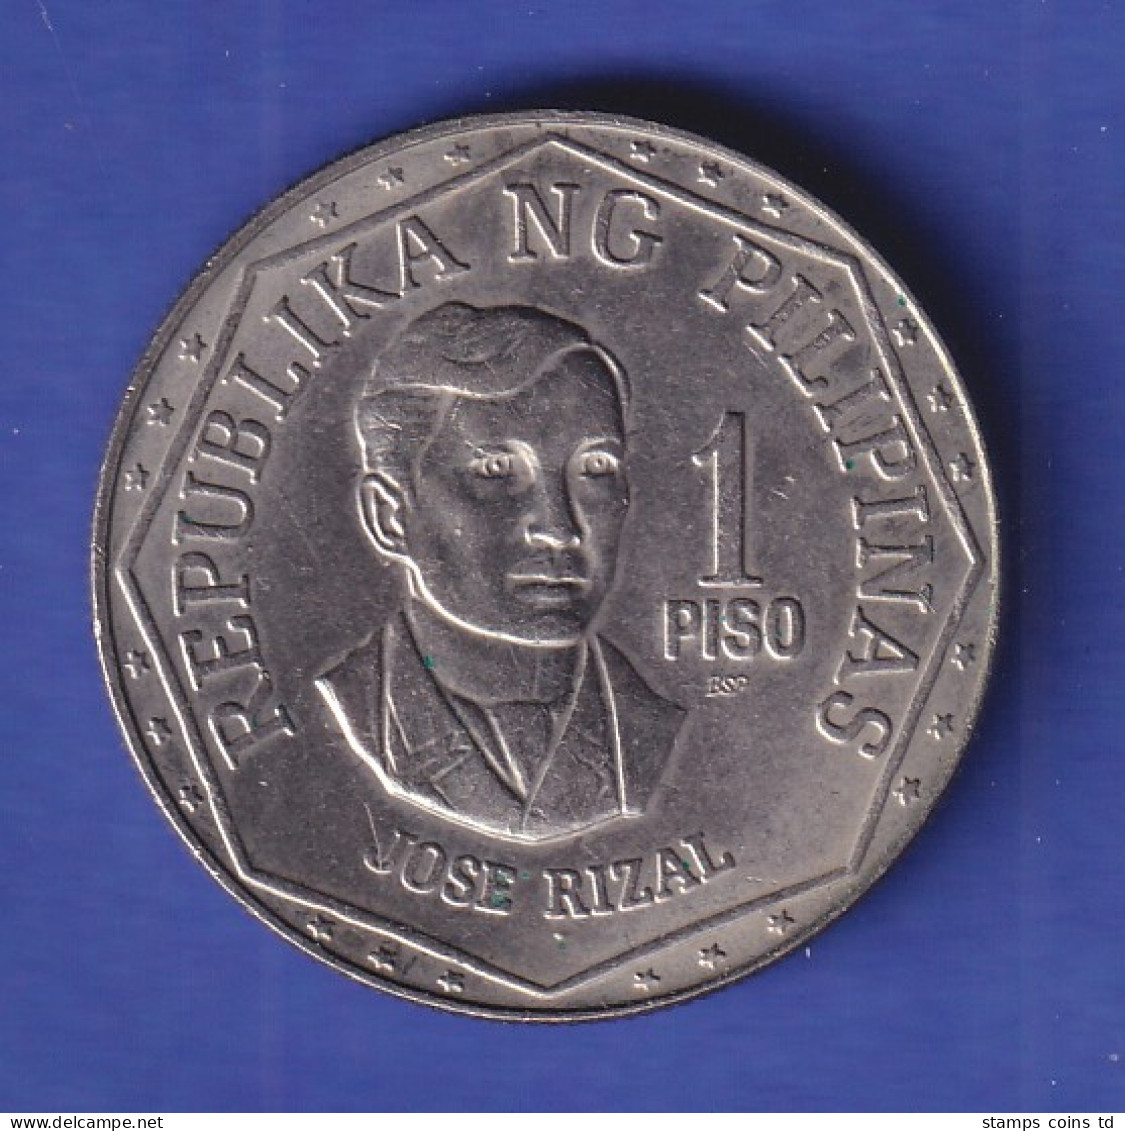 Philippinen Umlaufmünze 1 Peso Jose Rizal 1979 - Other - Oceania